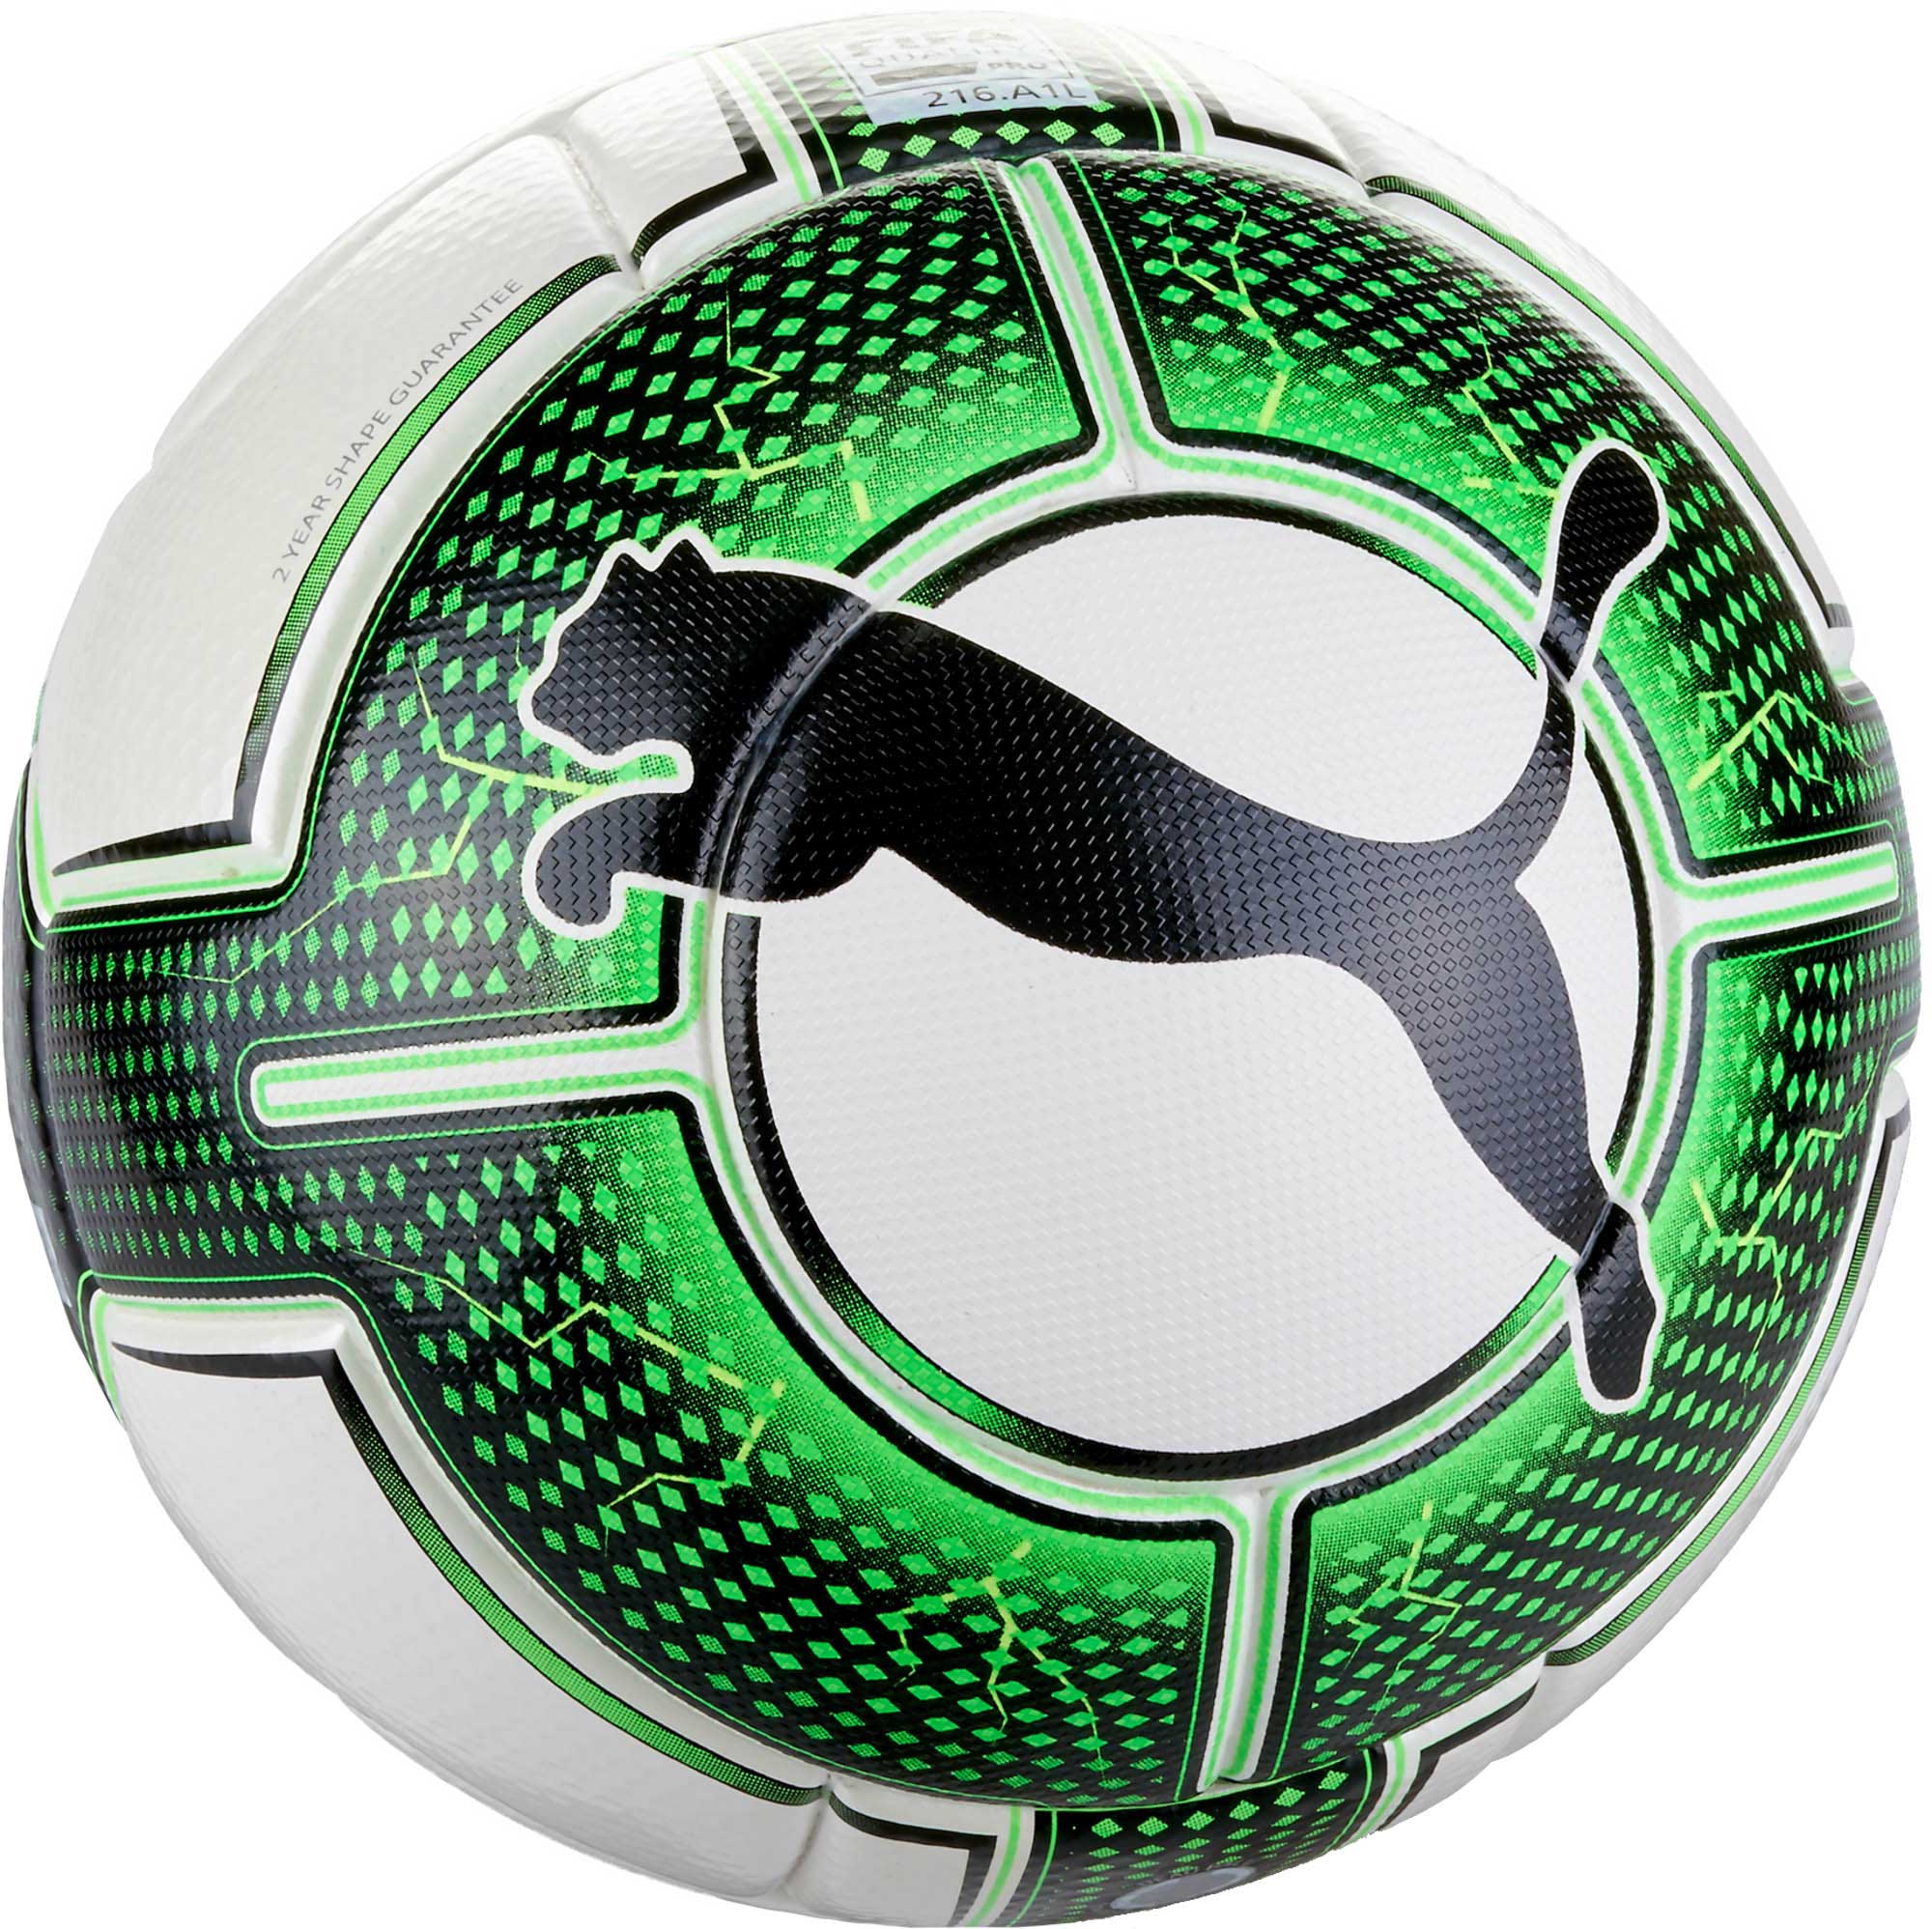 White and Green Ball Logo - Puma evoPOWER Vigor 1.3 Match Ball - Puma Soccer Balls